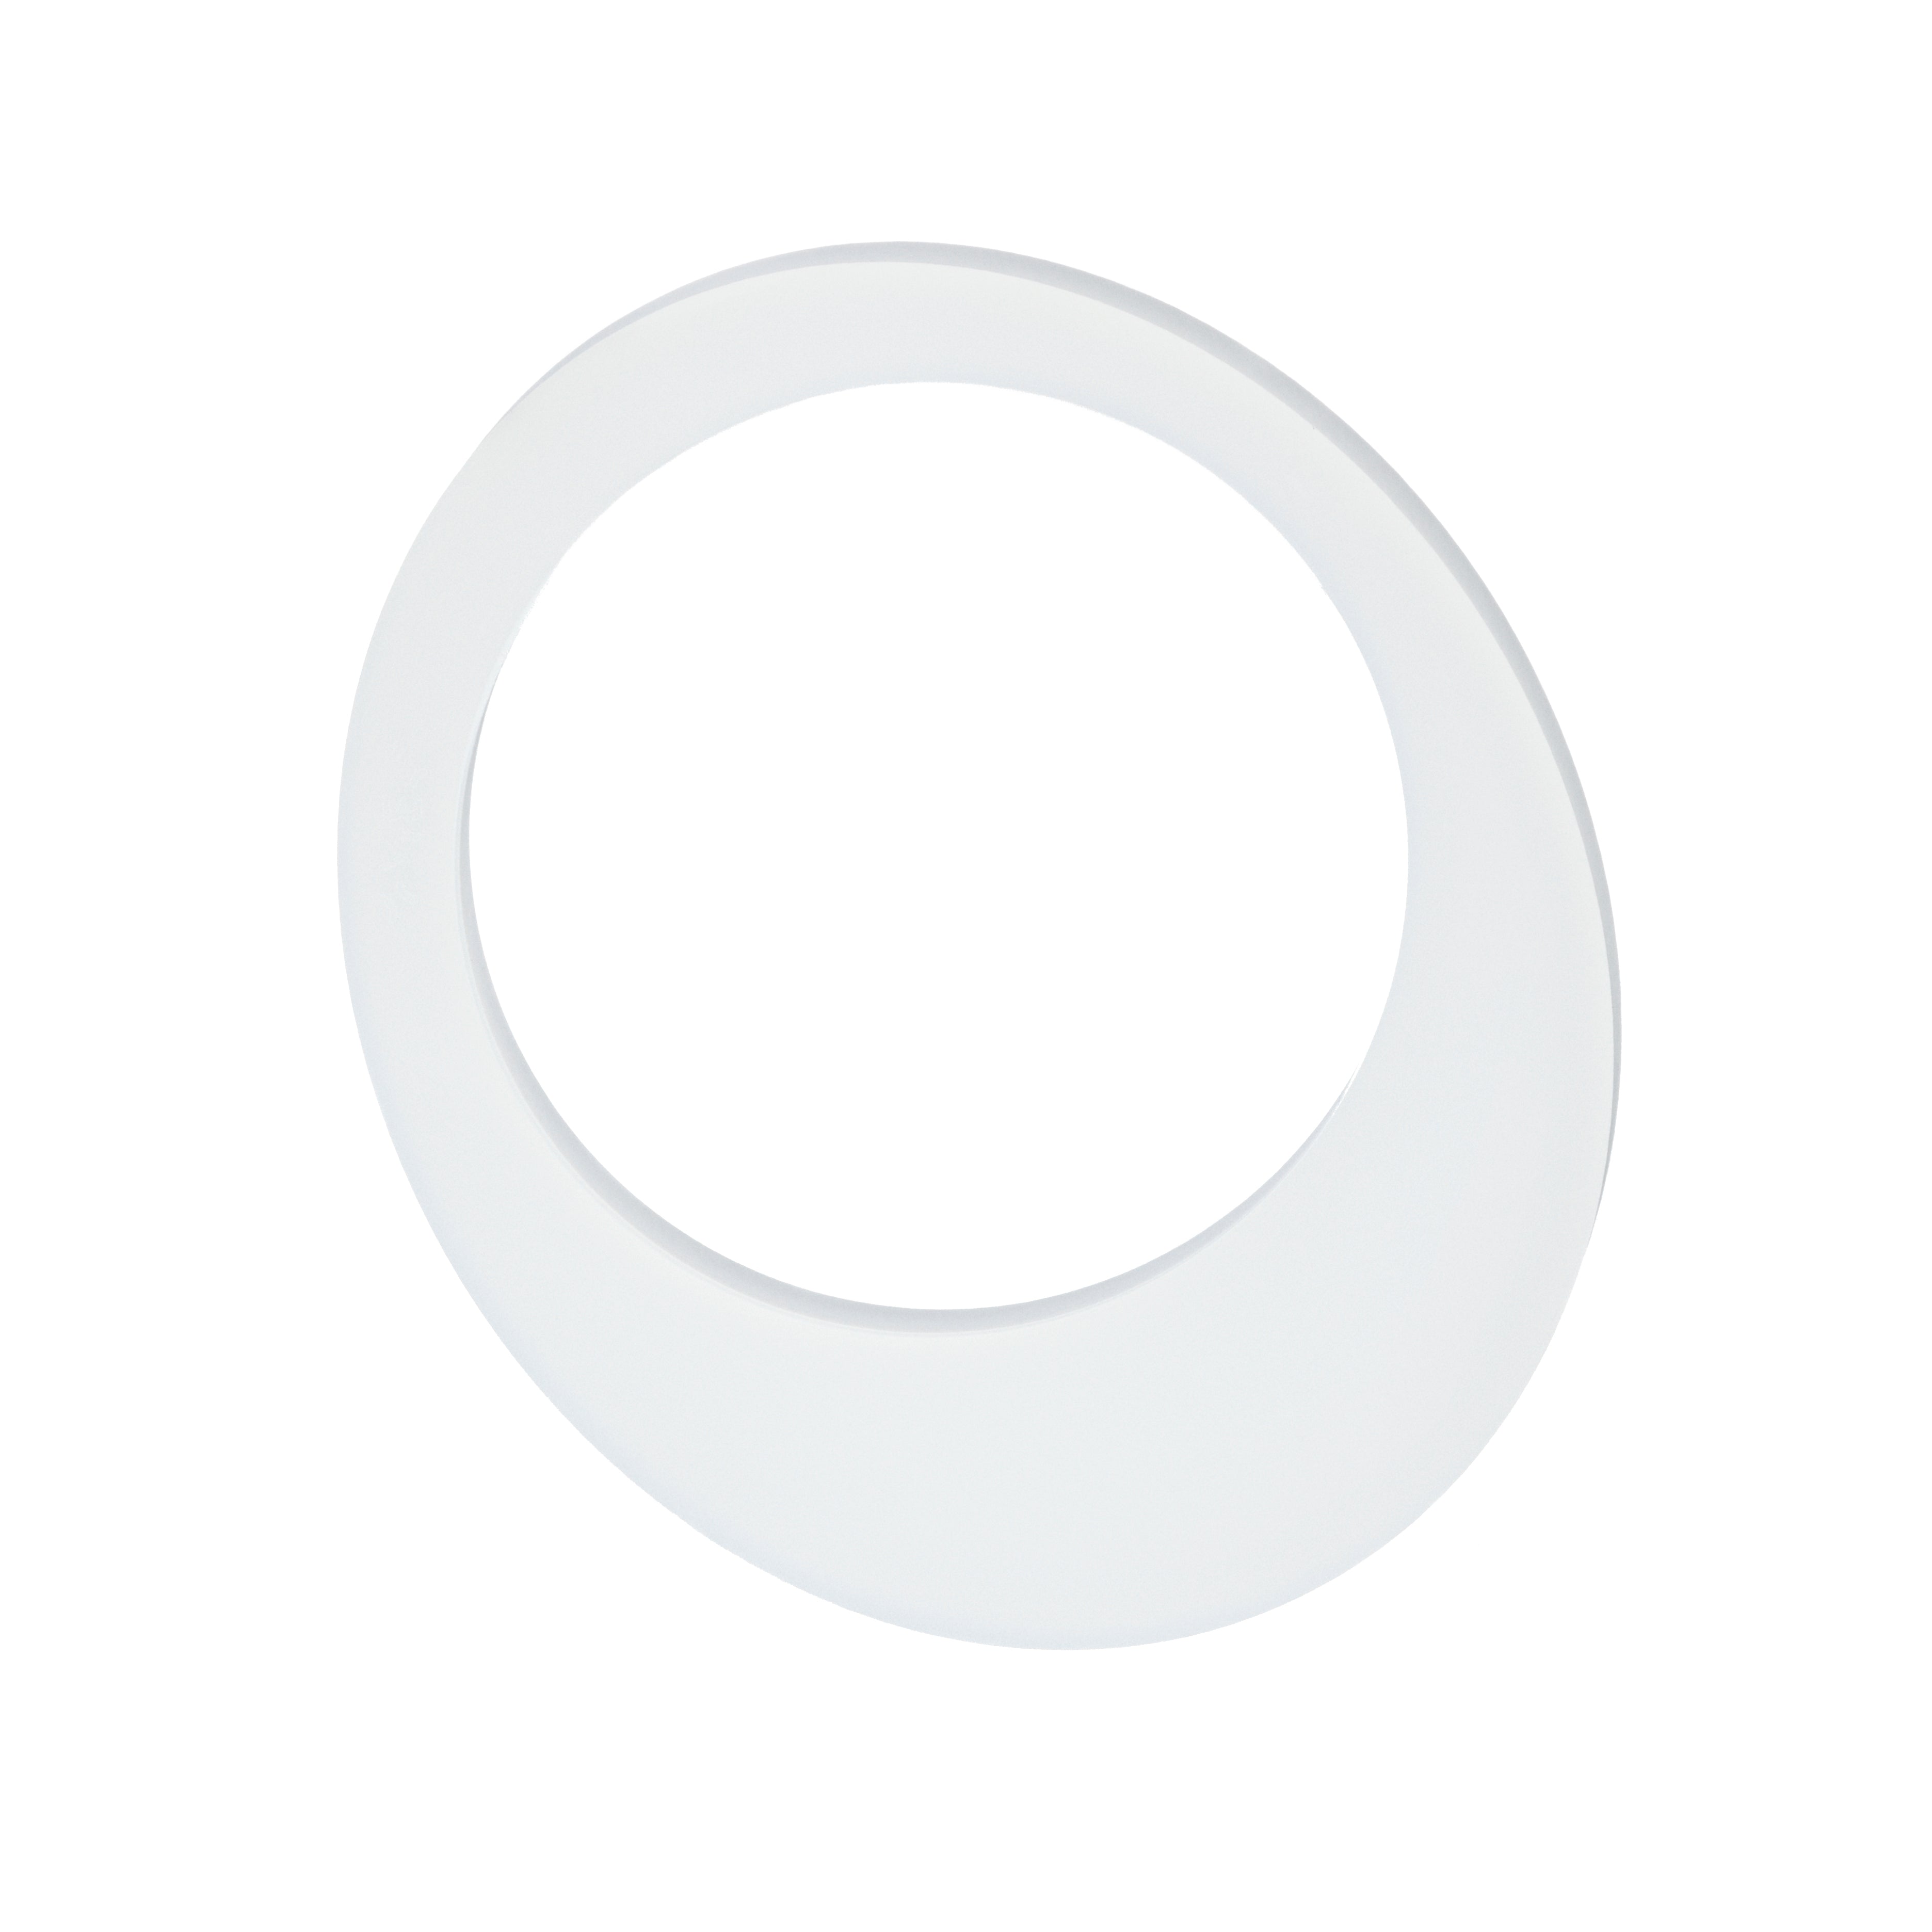 Bracelet acrylic translucid oval